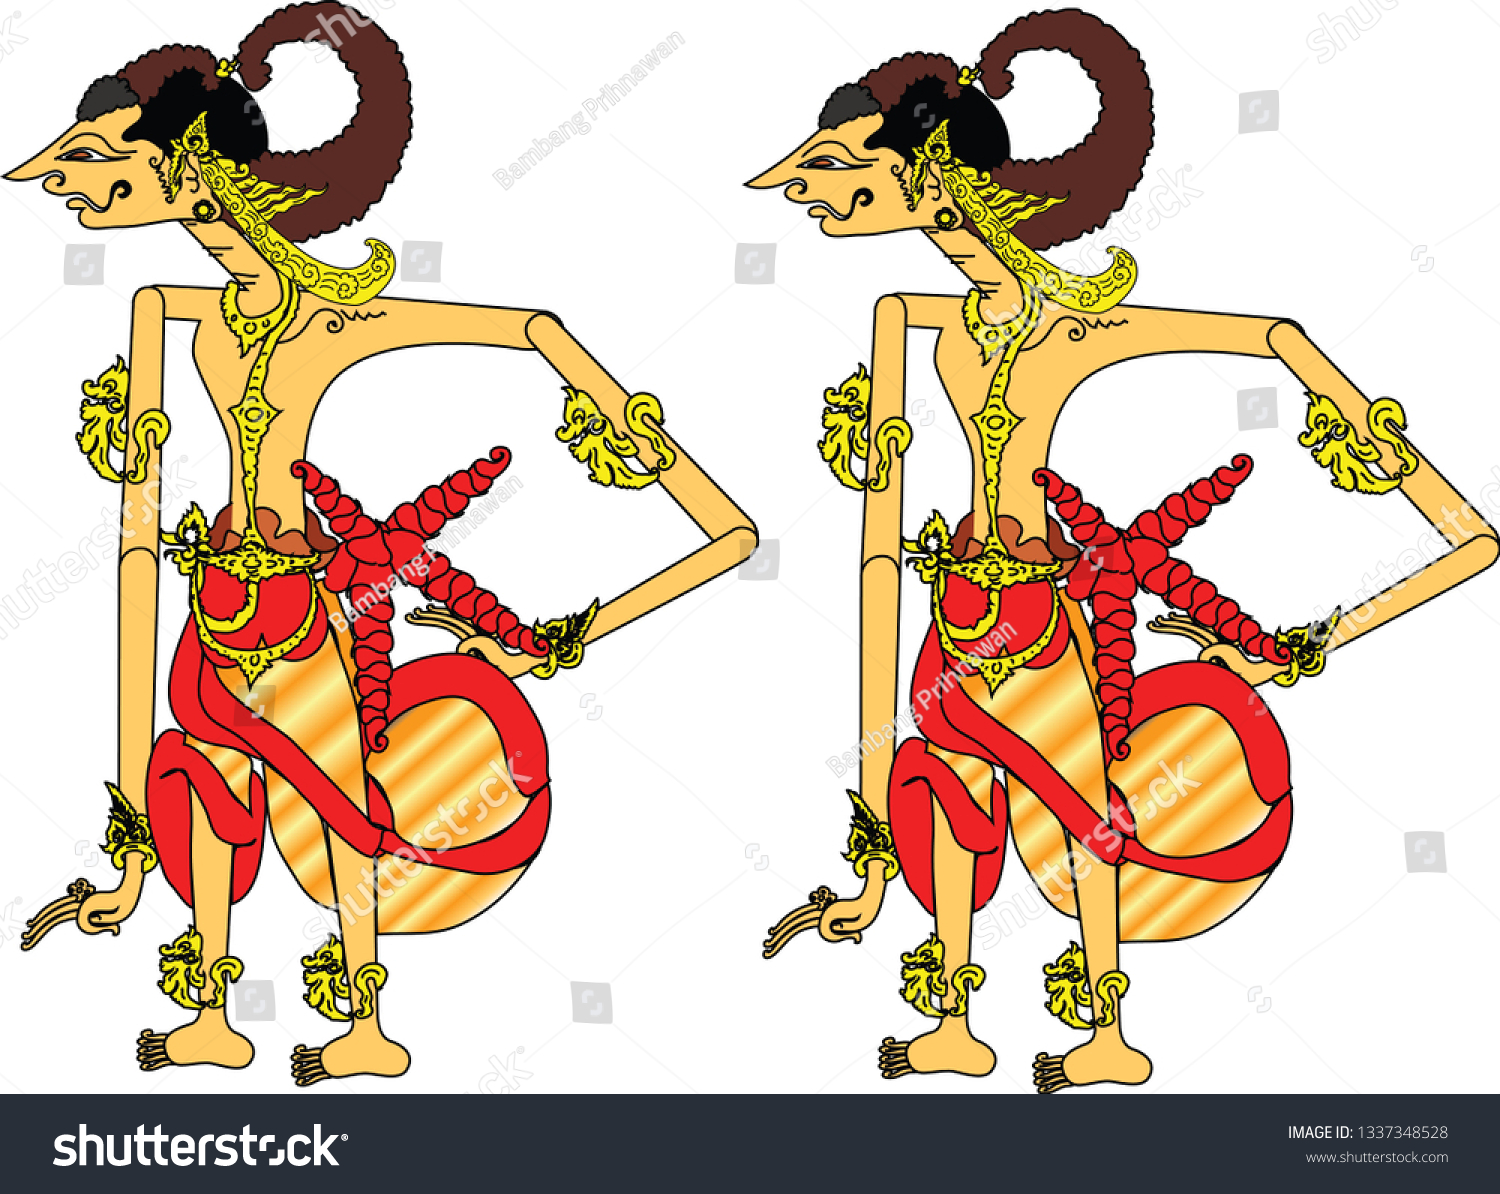  The image shows two characters from the Javanese puppet theater, Gatotkaca and Nakula-Sadewa, along with Kresna, a character from the Hindu epic Mahabharata.